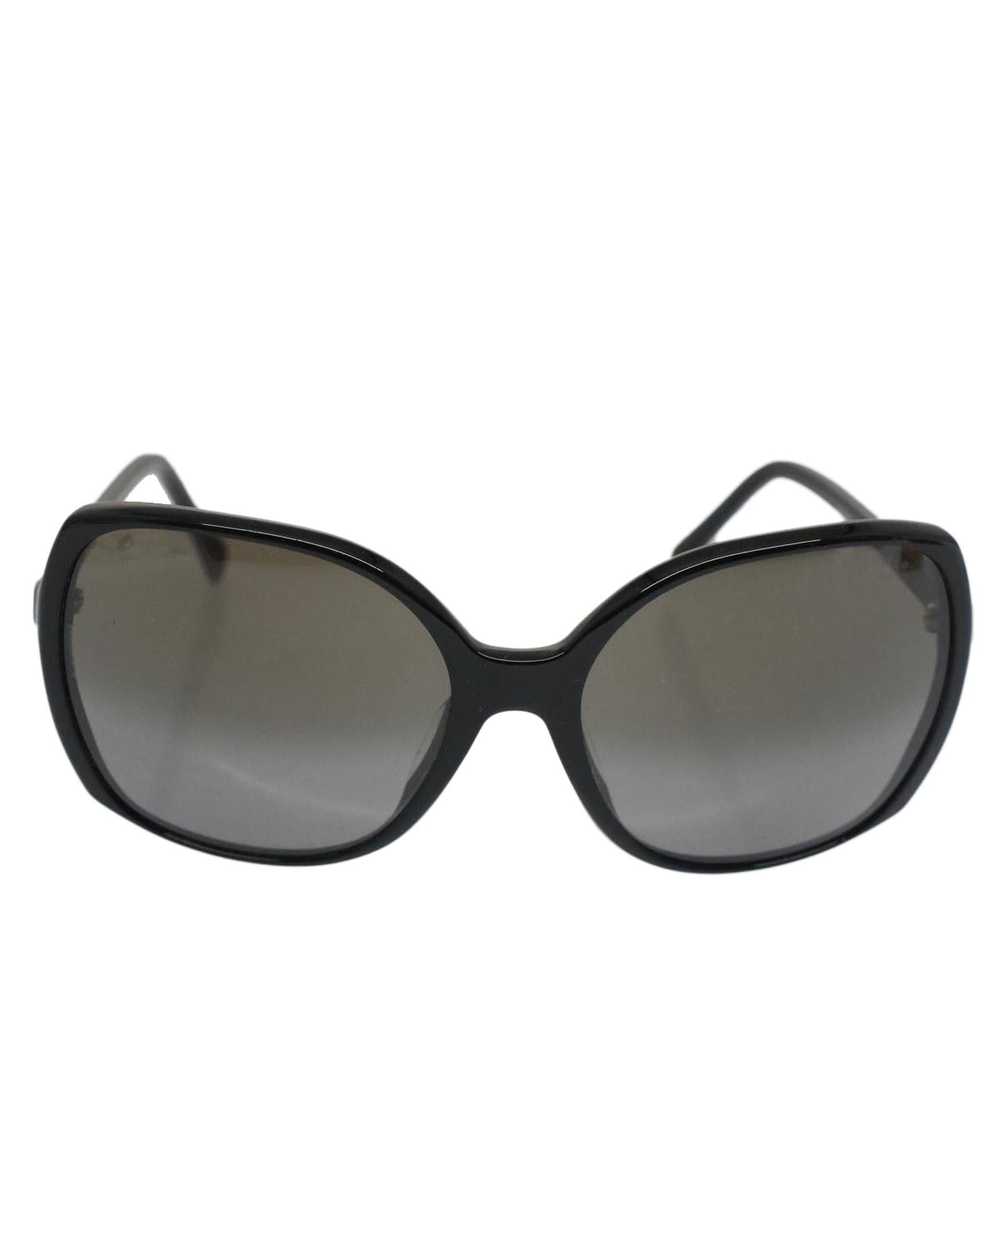 Chanel Black Plastic Sunglasses with CC Logo - image 2